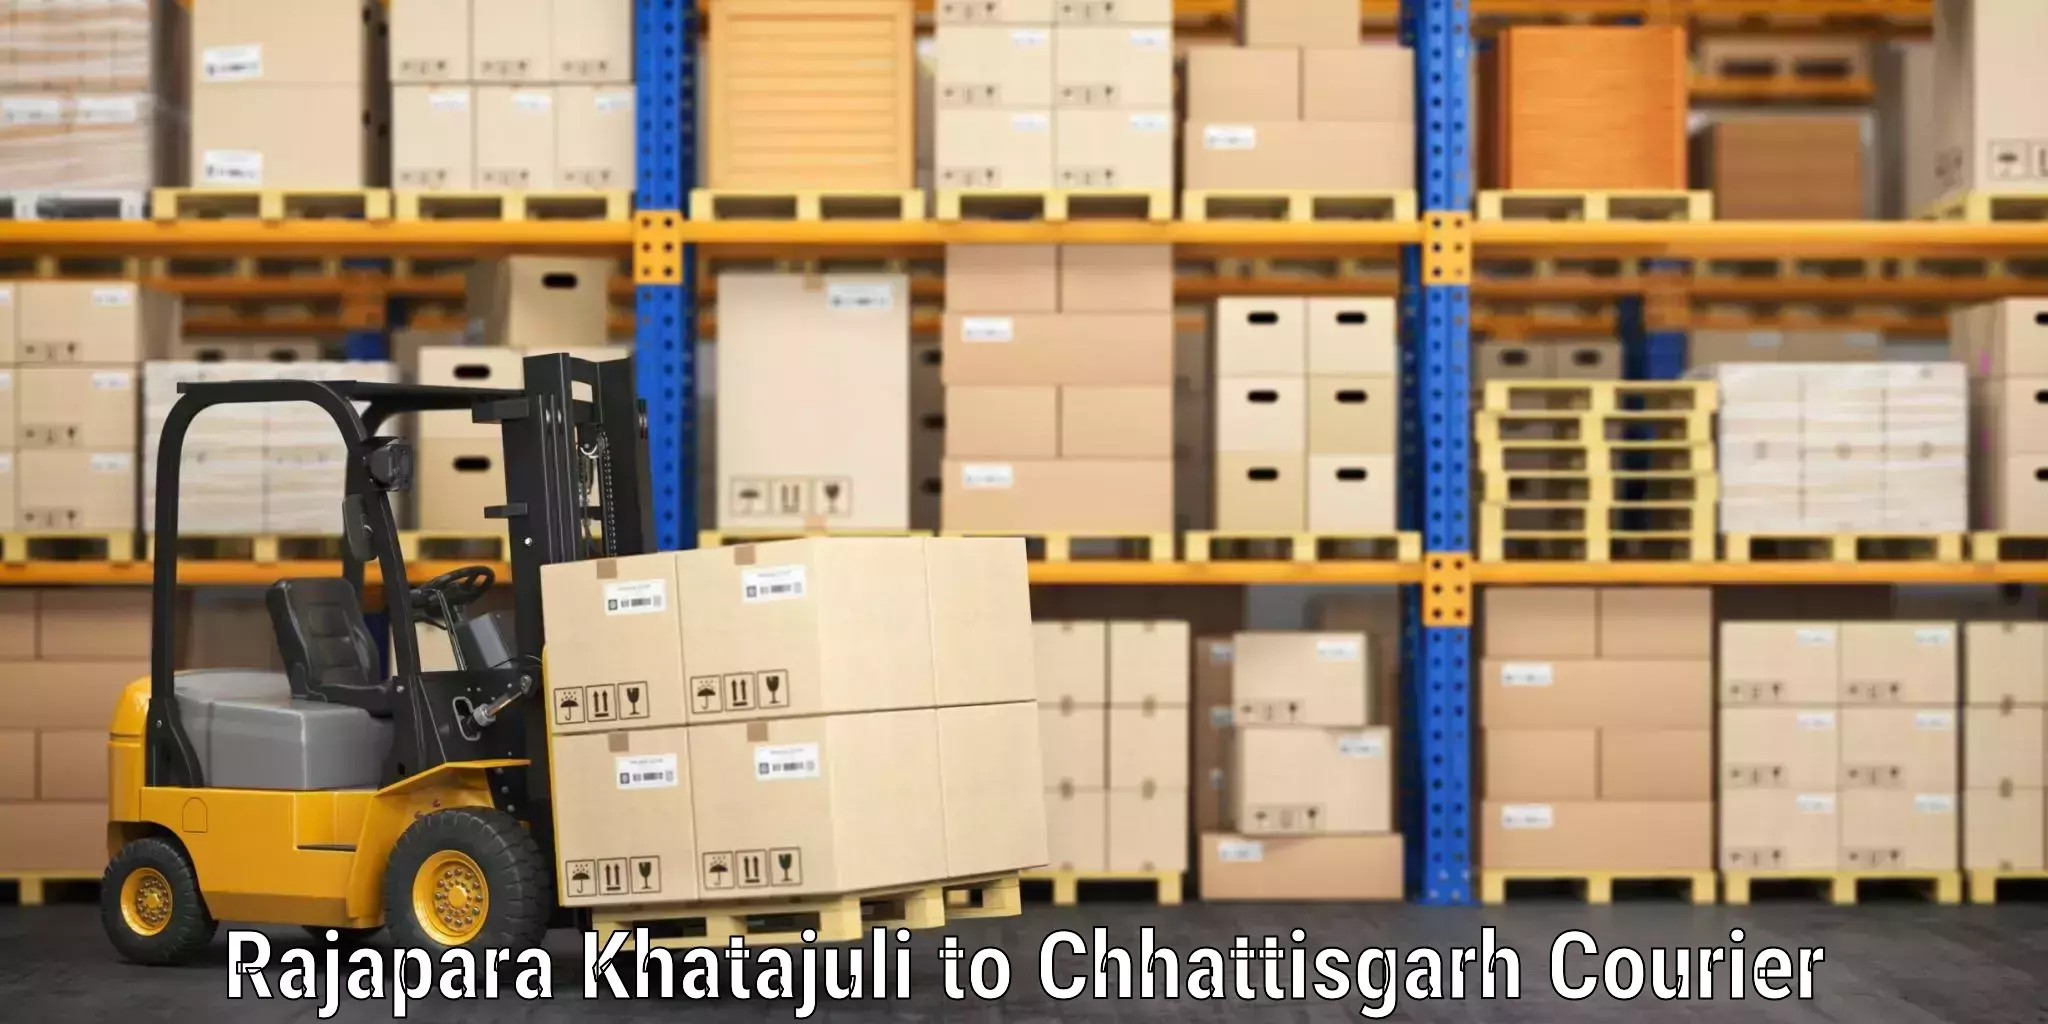 Luggage transport consultancy Rajapara Khatajuli to Chhattisgarh